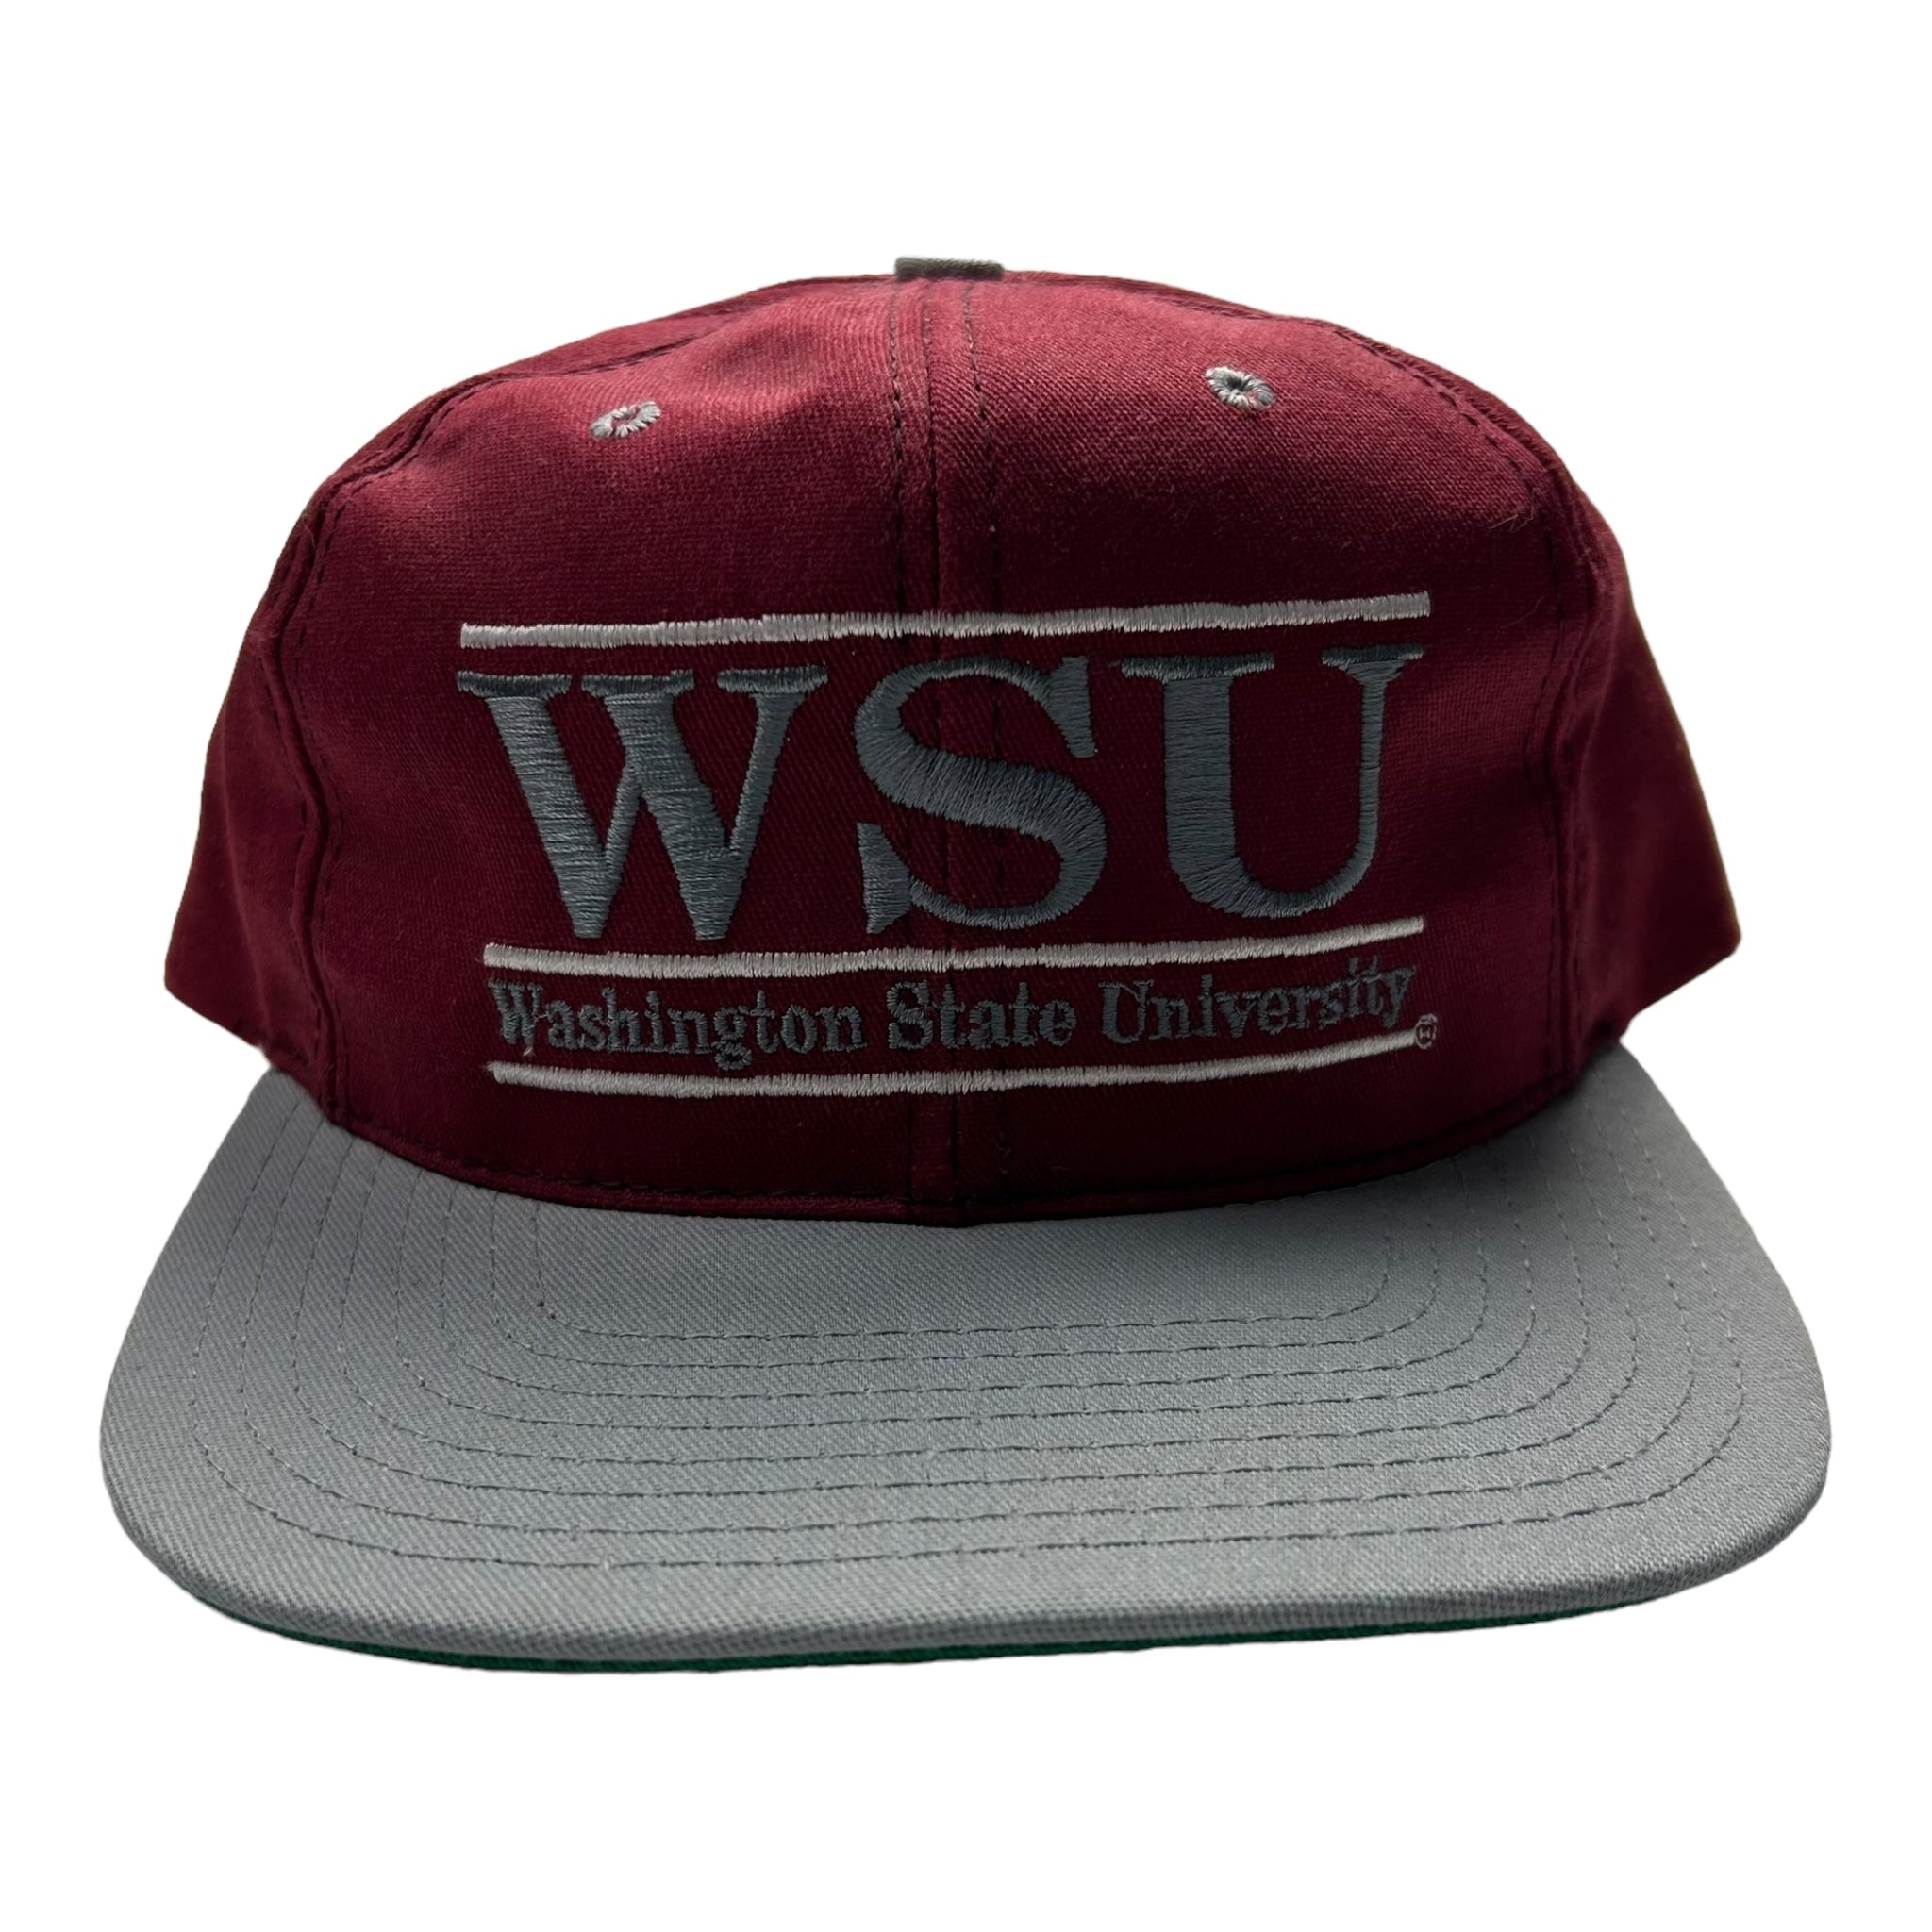 Vintage Washington State University Spellout Hat